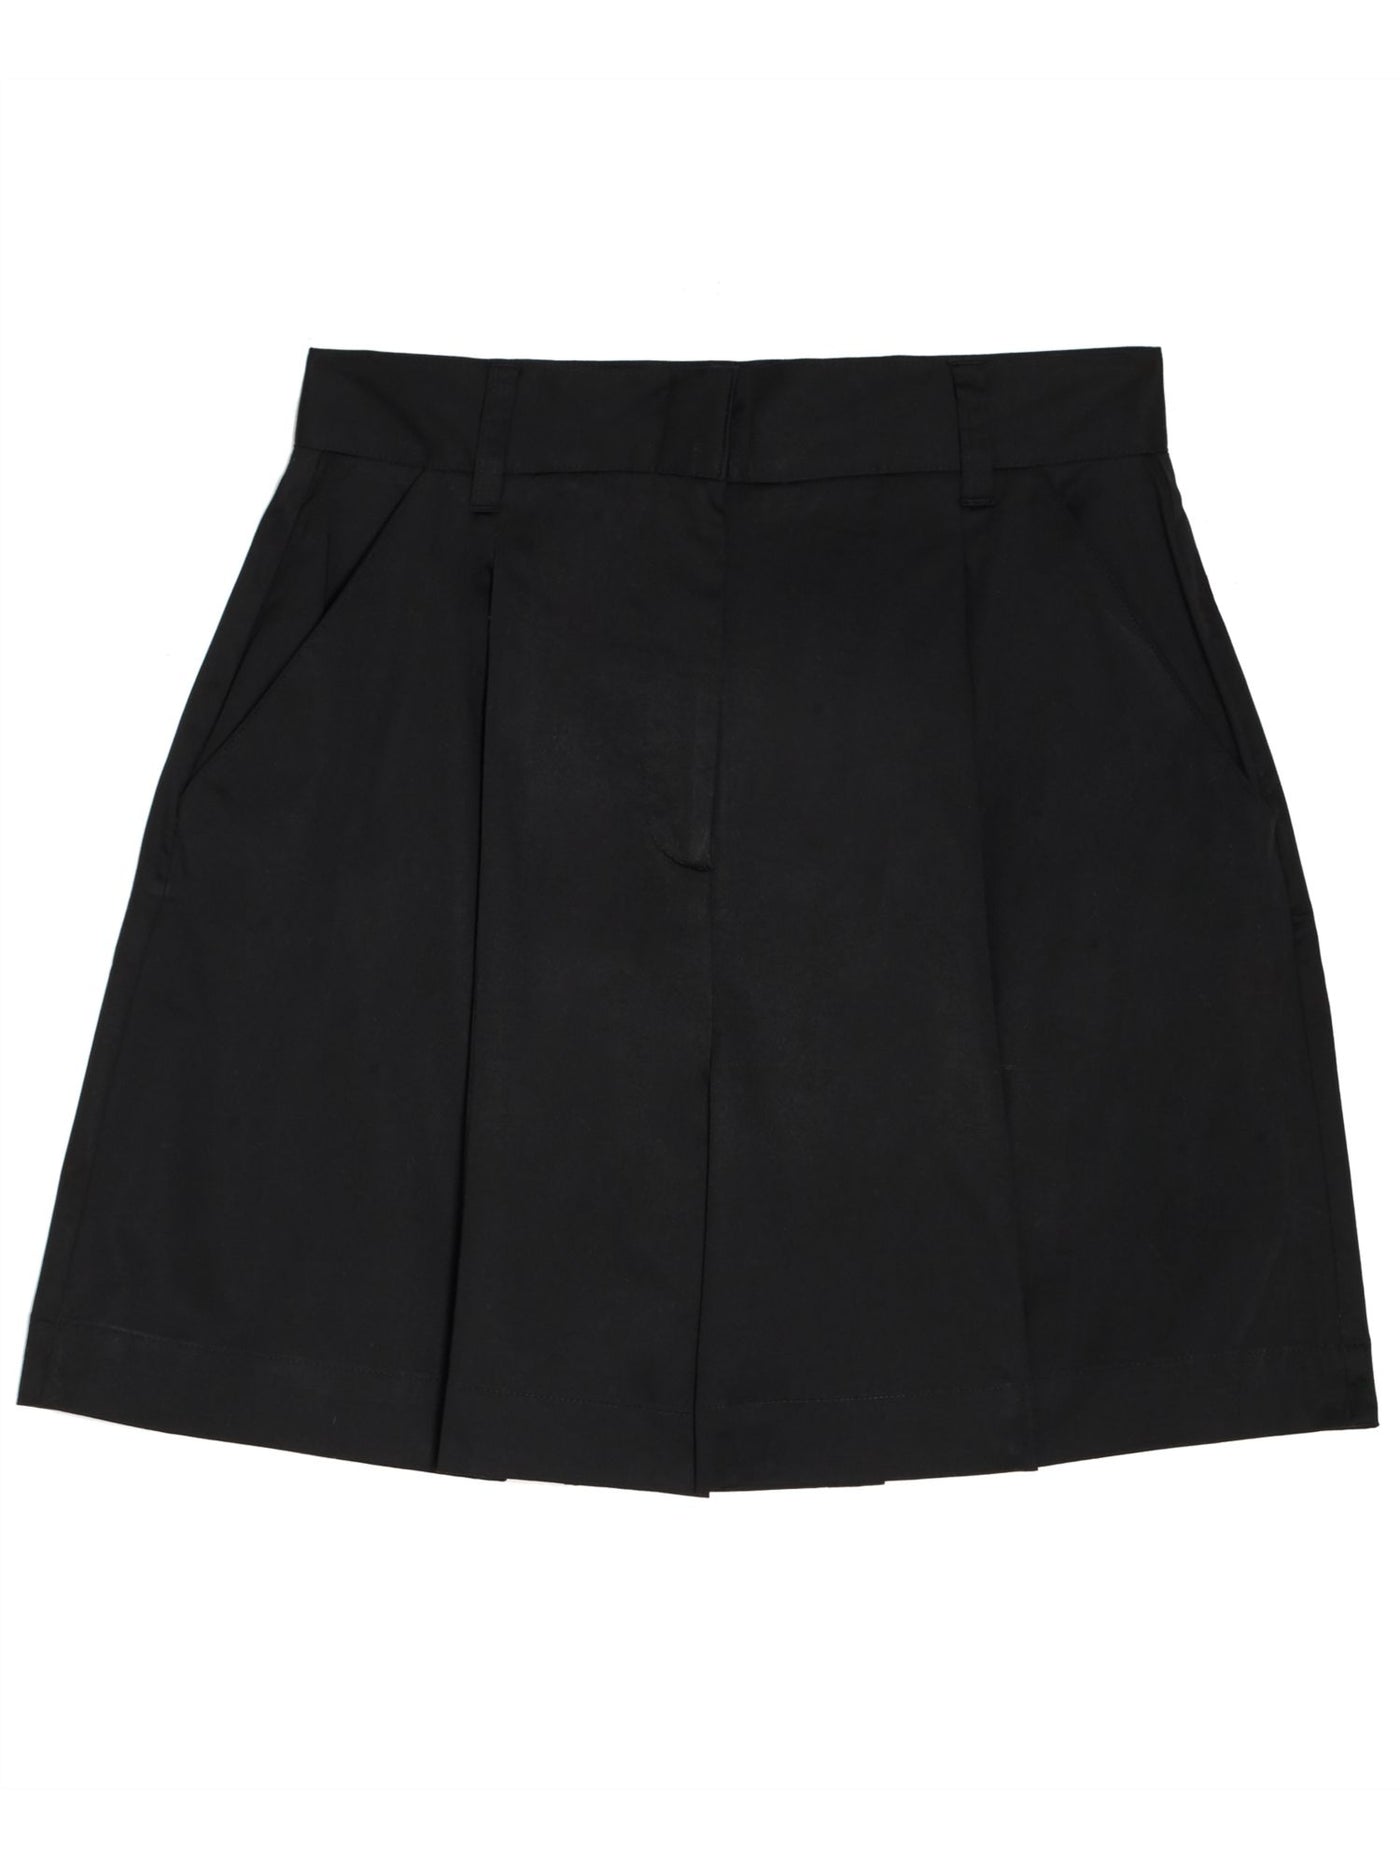 DANIELLE BERNSTEIN Womens Black Pleated Zippered Shorts Size: 14